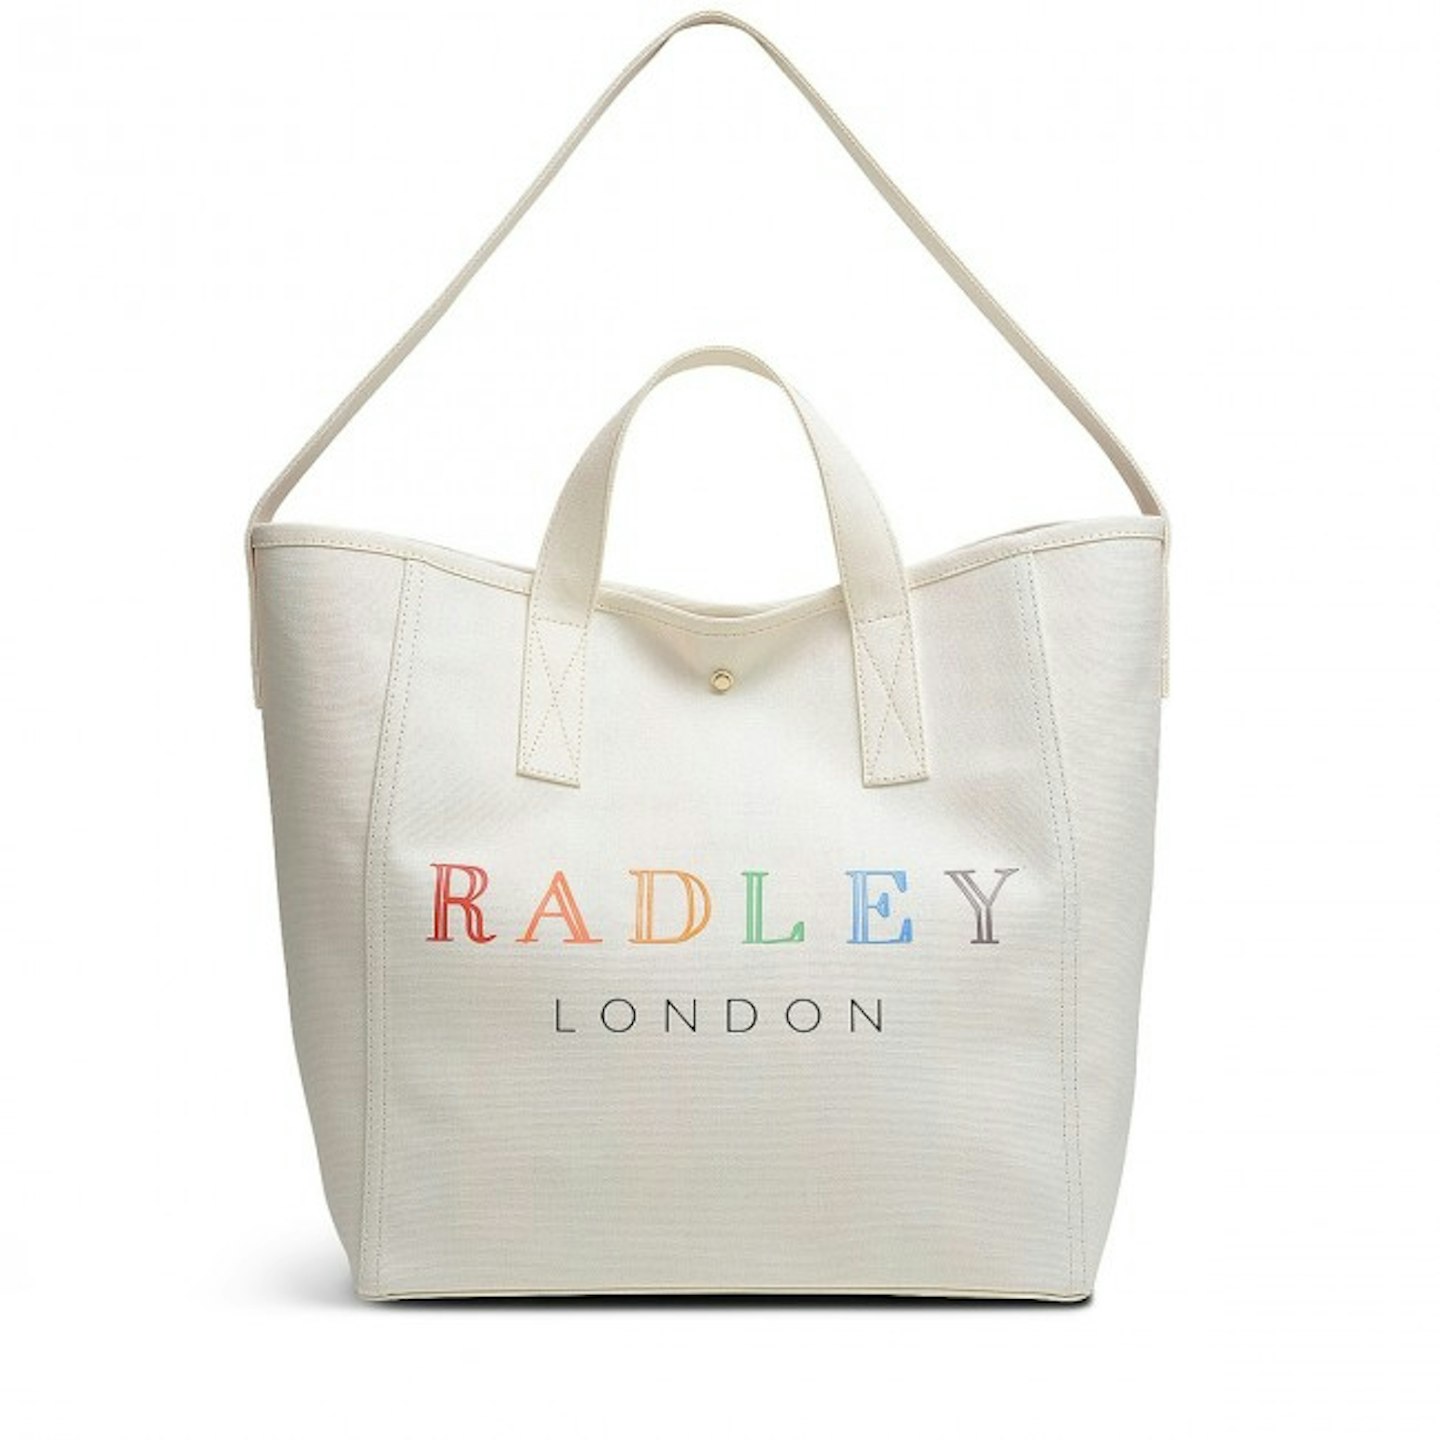 Radley London, Beach Bag - Pride, £109